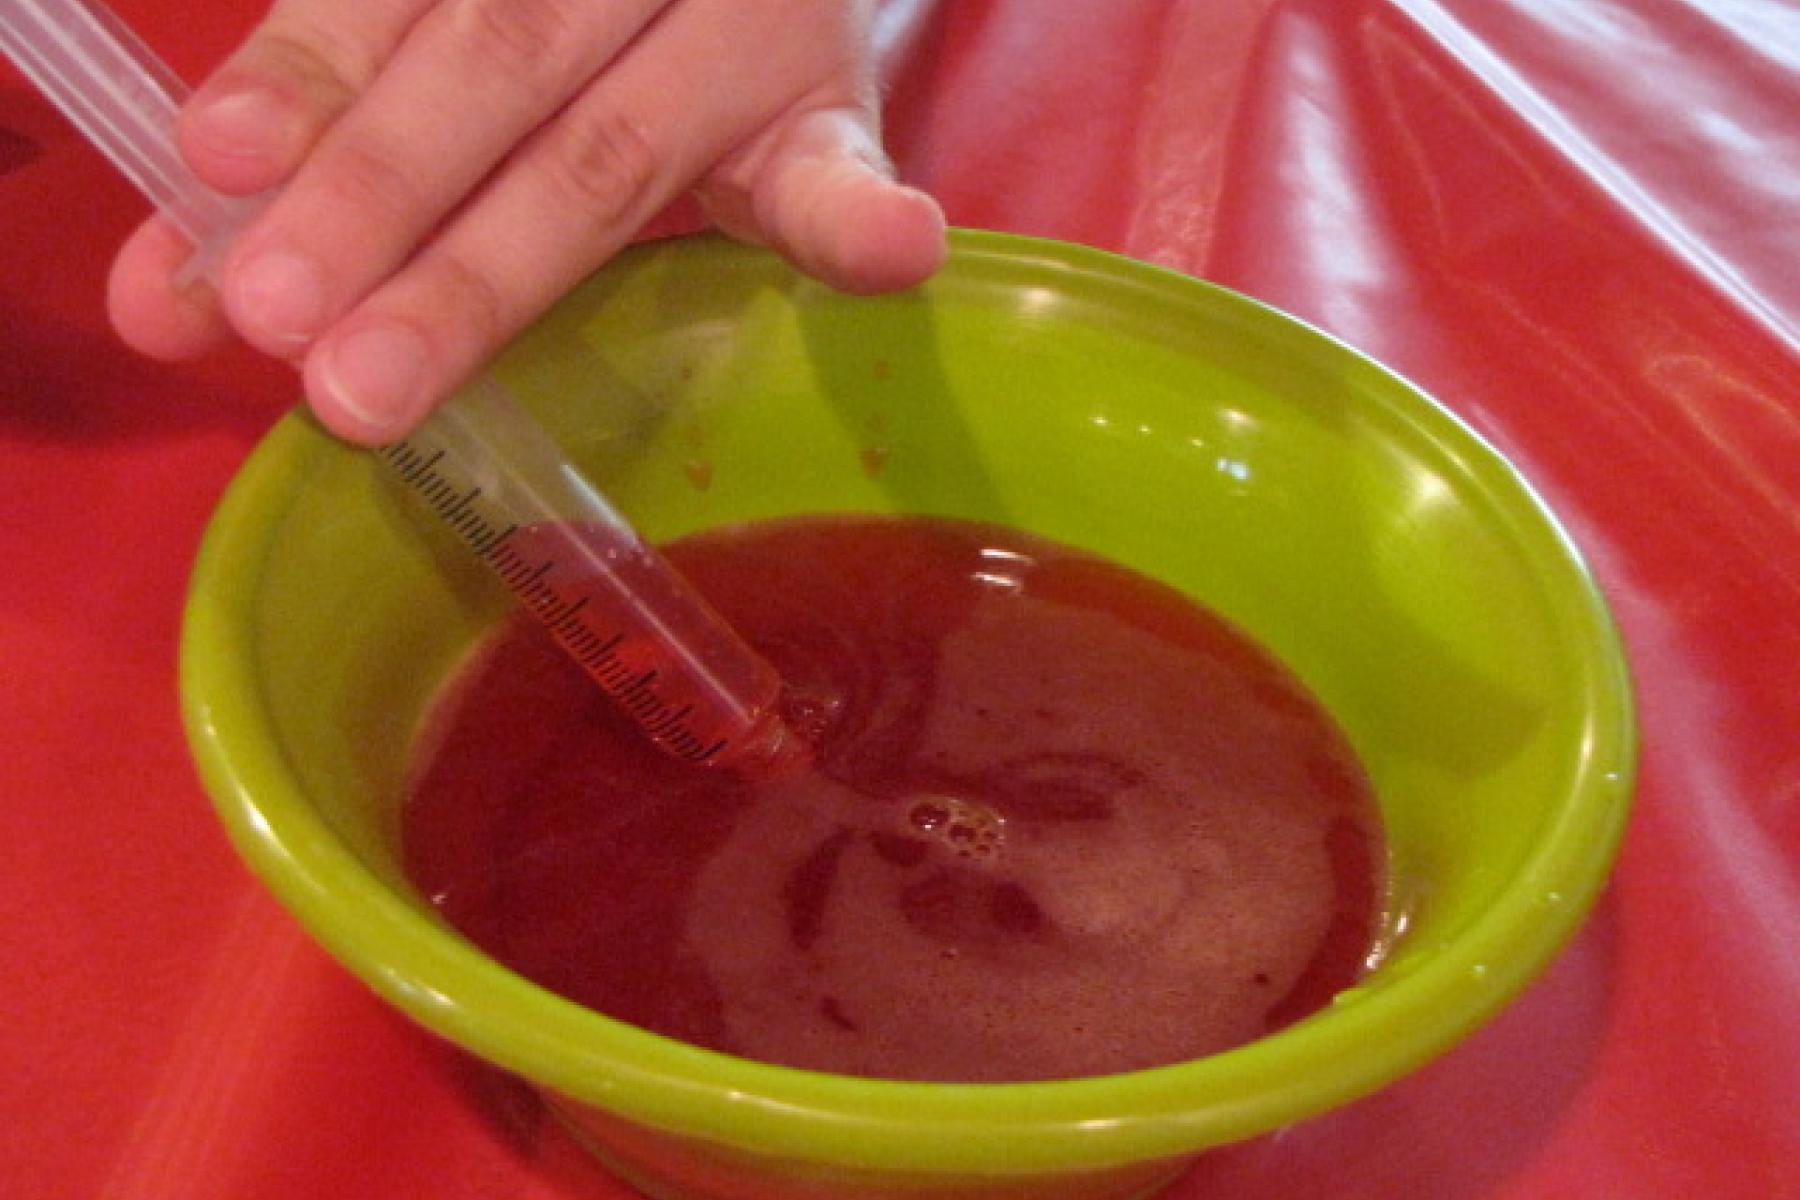 Moving the sodium alginate mixture into a syringe